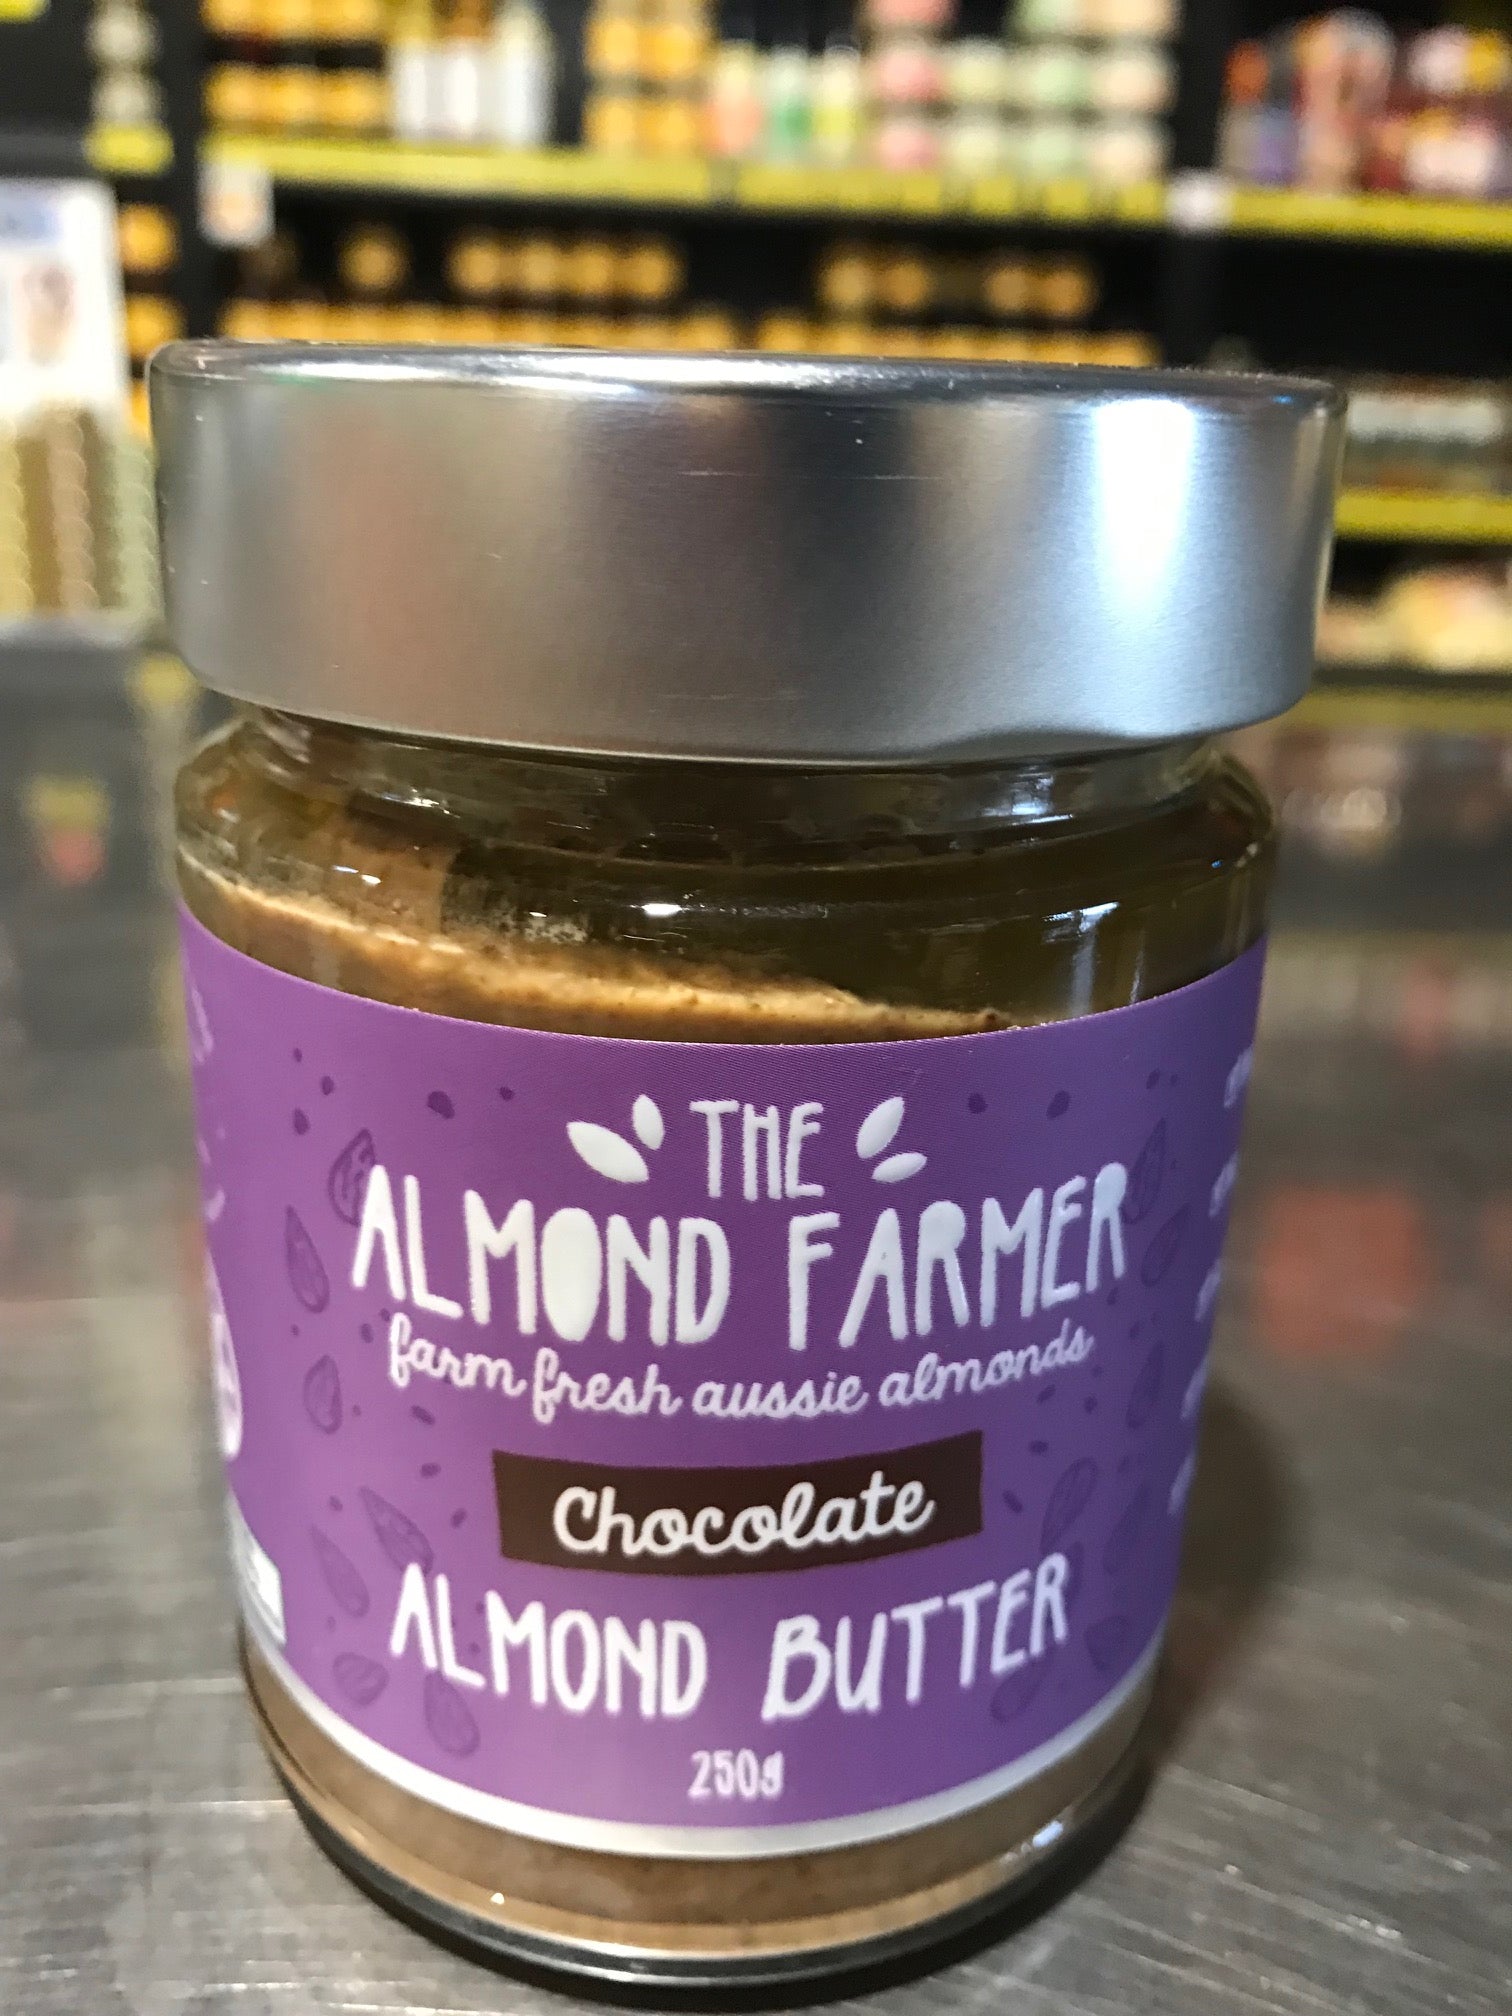 The Almond Farmer - Chocolate Almond Butter - 250g